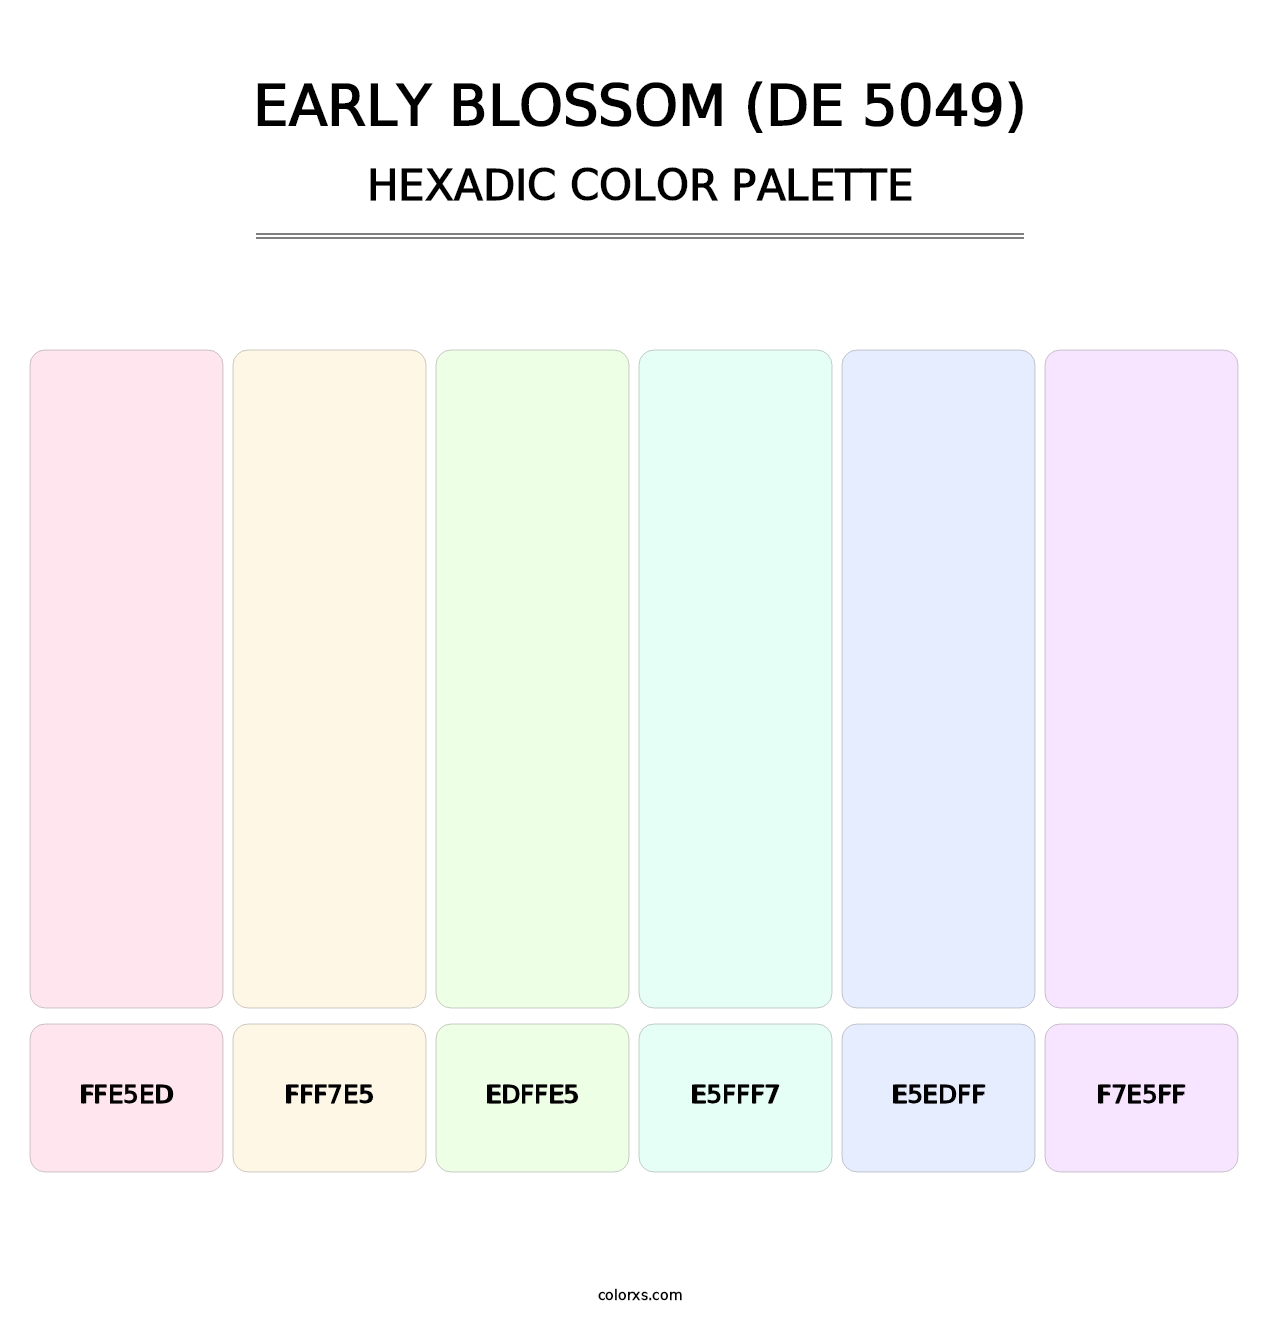 Early Blossom (DE 5049) - Hexadic Color Palette